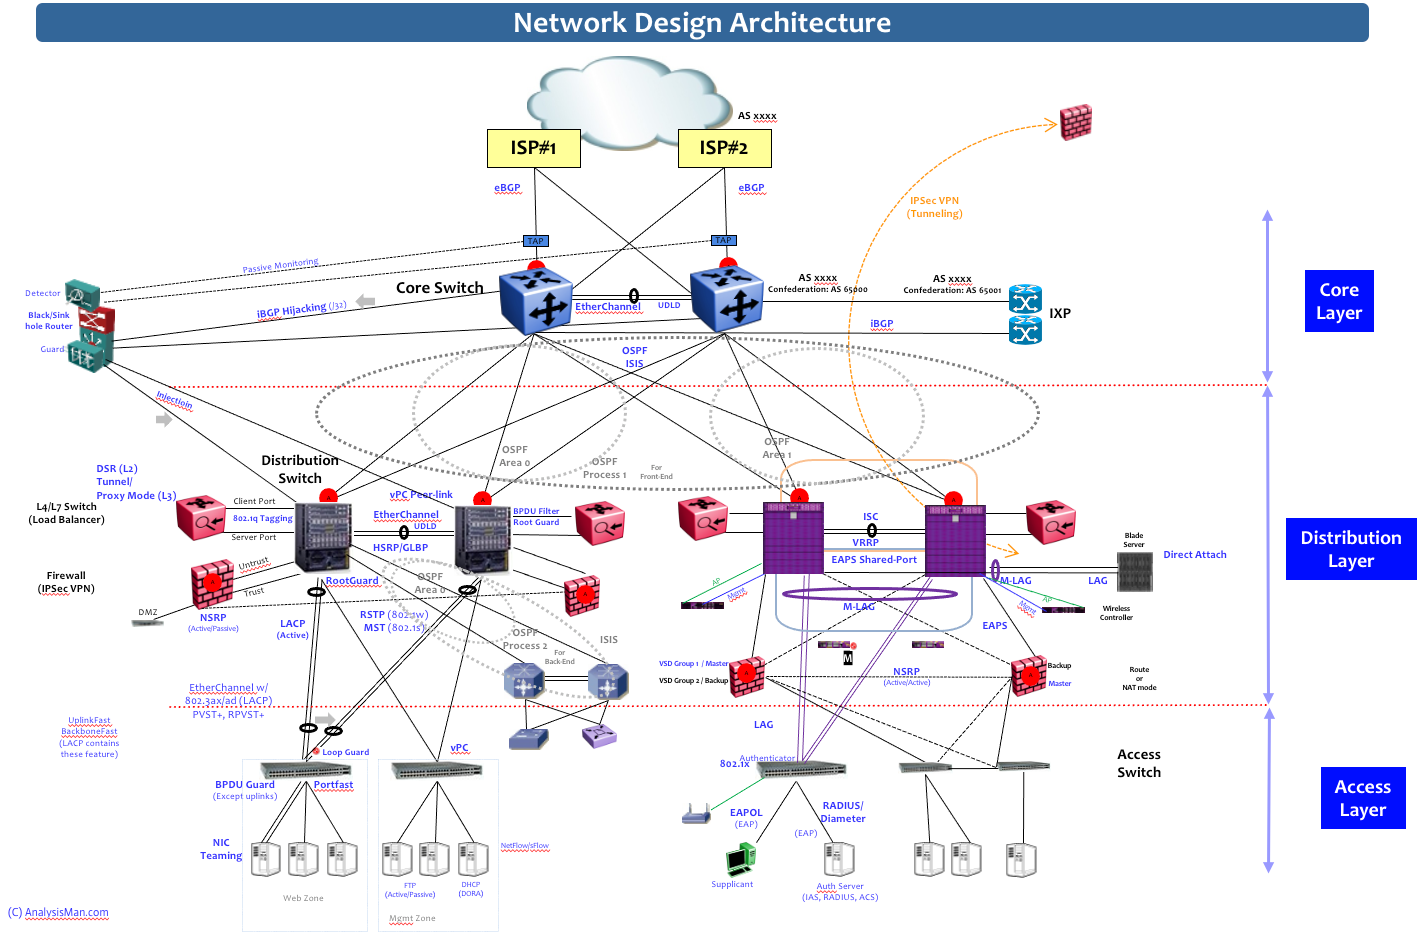 AnalysisMan's Network Design Architecture | AnalysisMan